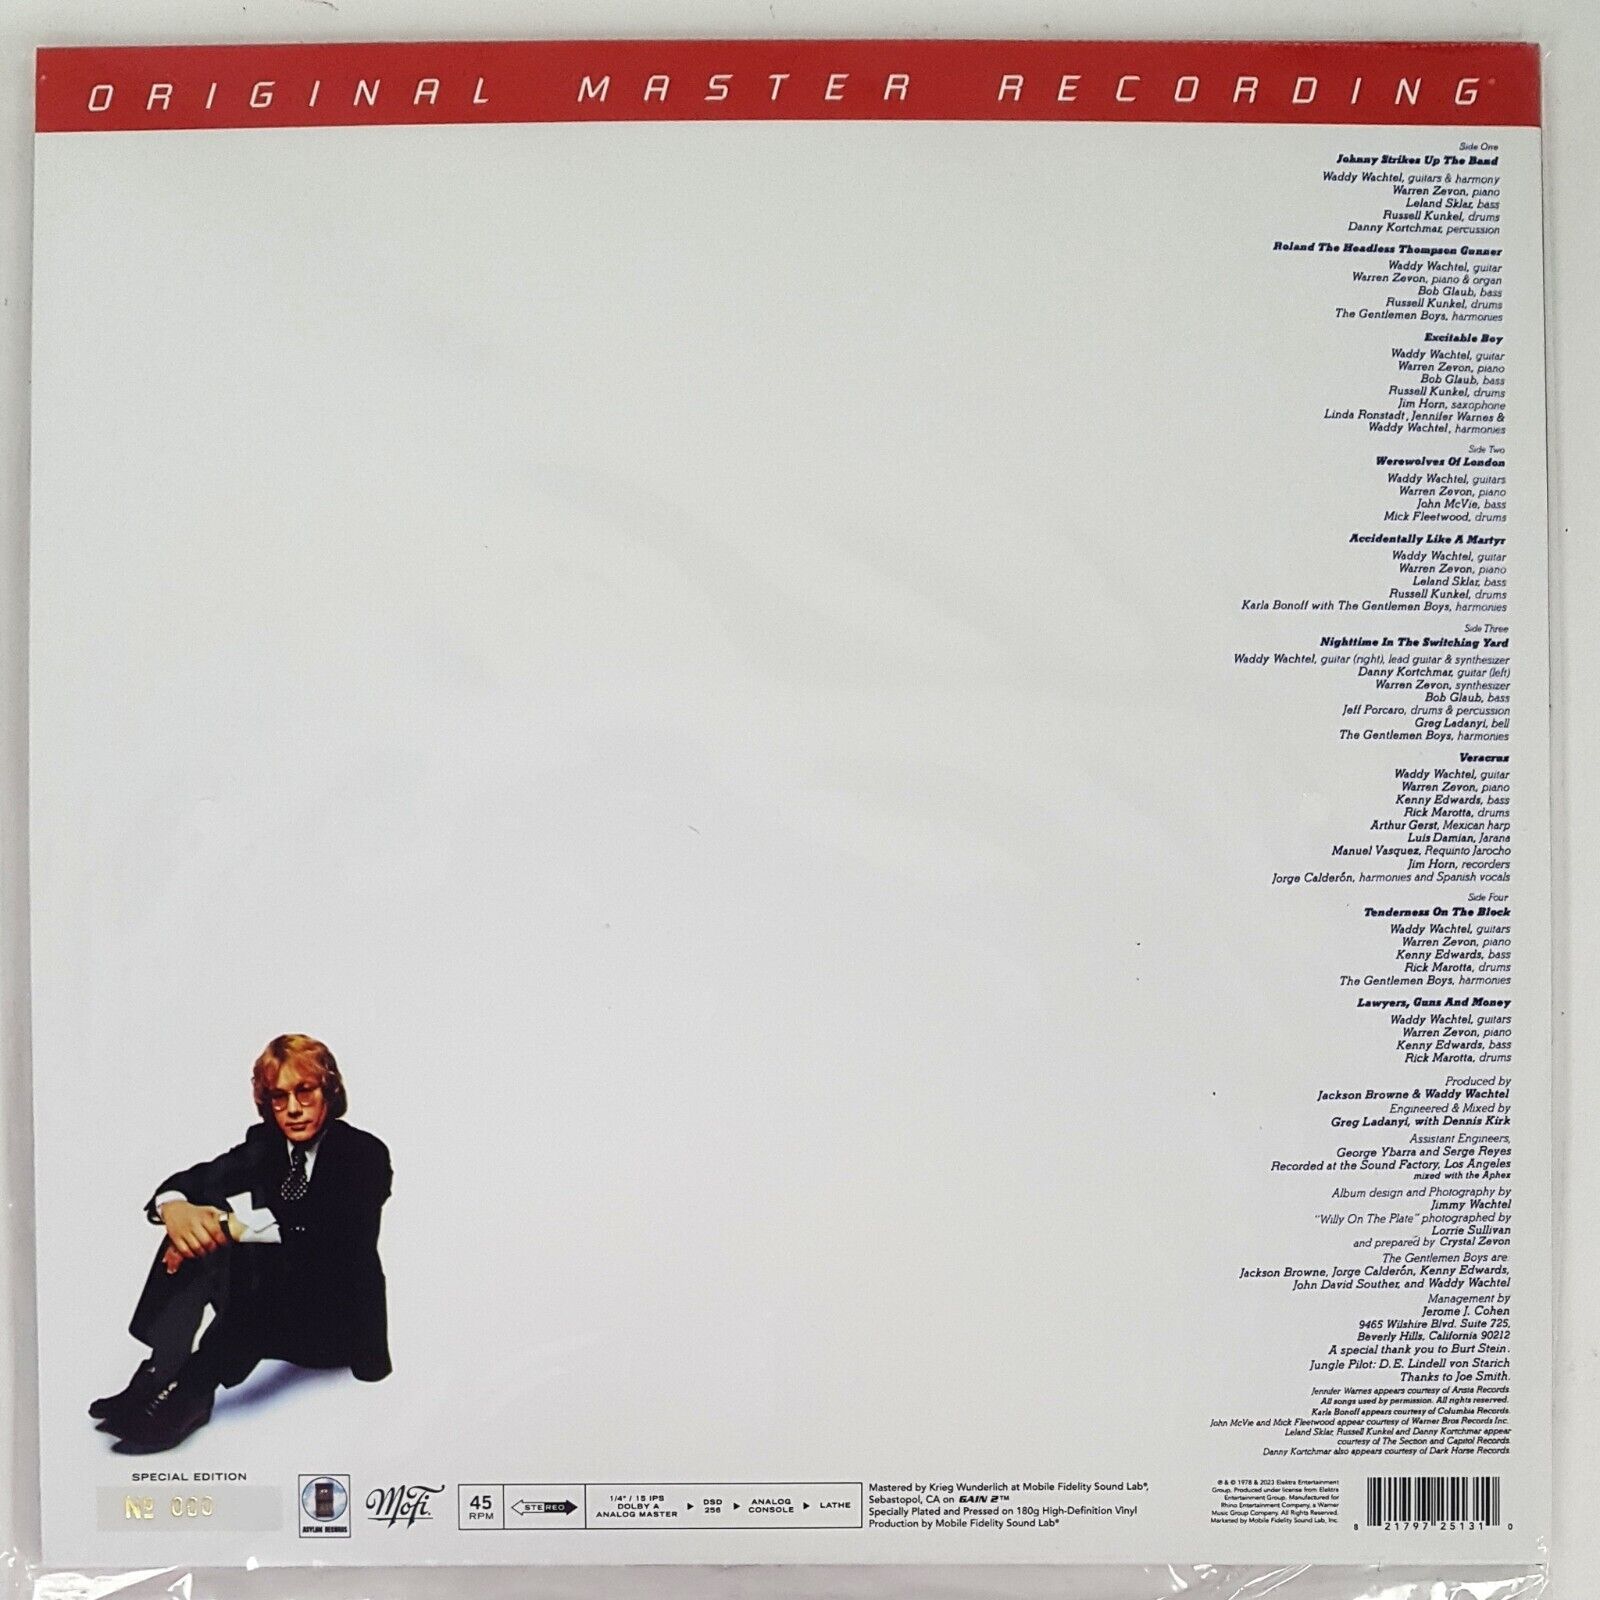 Warren Zevon ‎– Excitable Boy 2xLP– Original Master Recording (MoFi) Audiophile